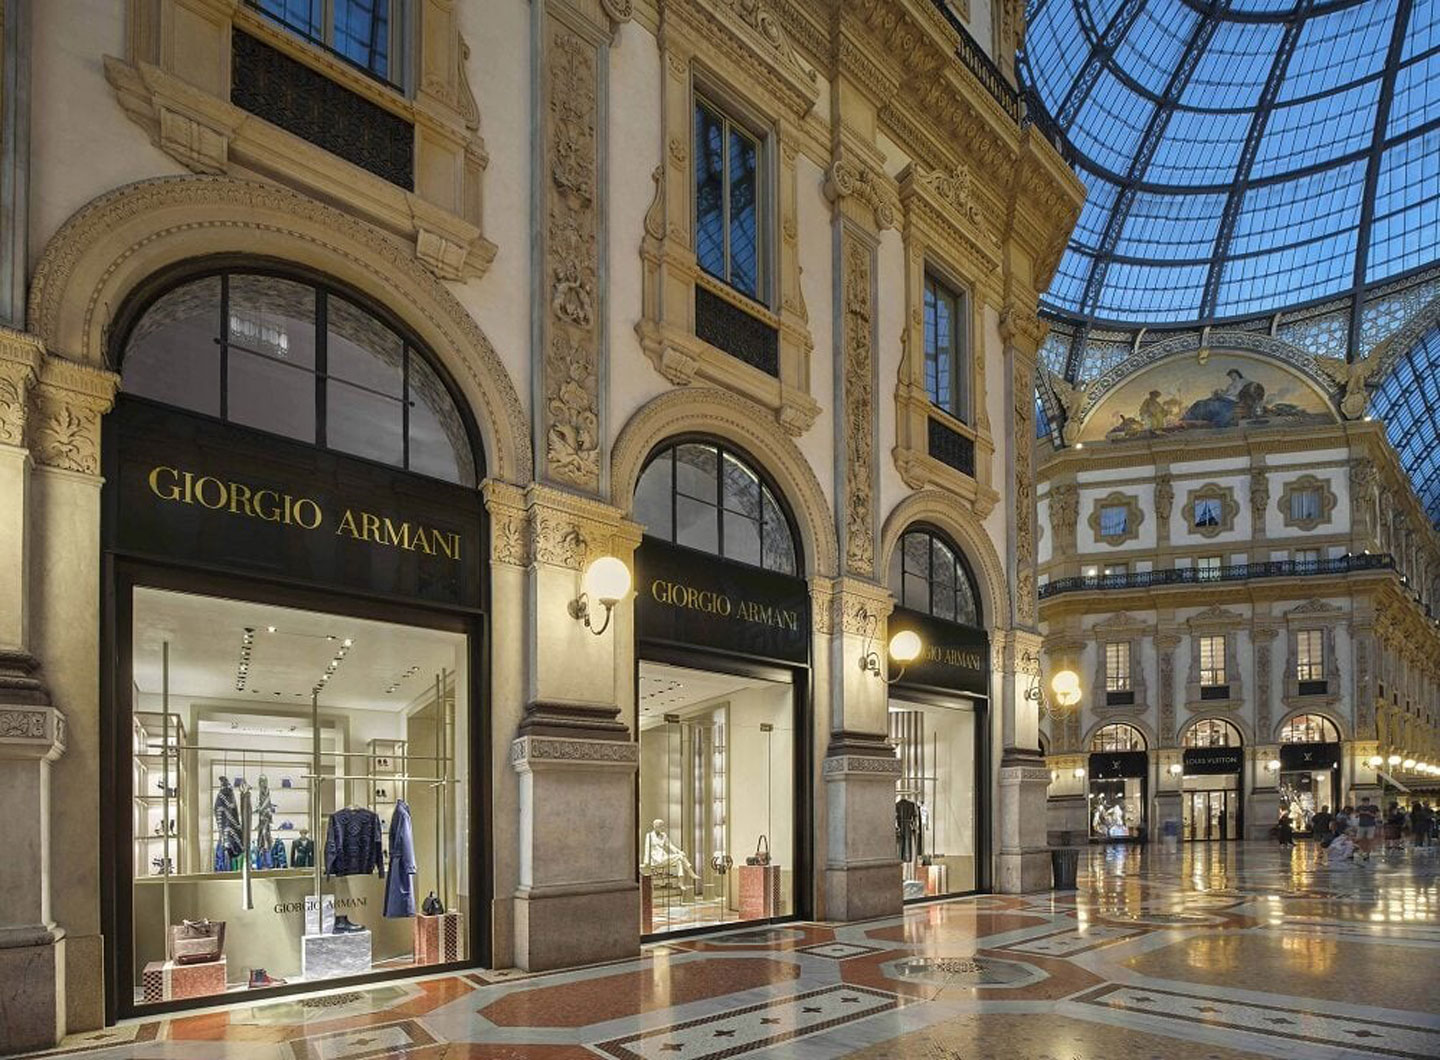 The expanded Giorgio Armani boutique in Galleria Vittorio Emanuele, Milan